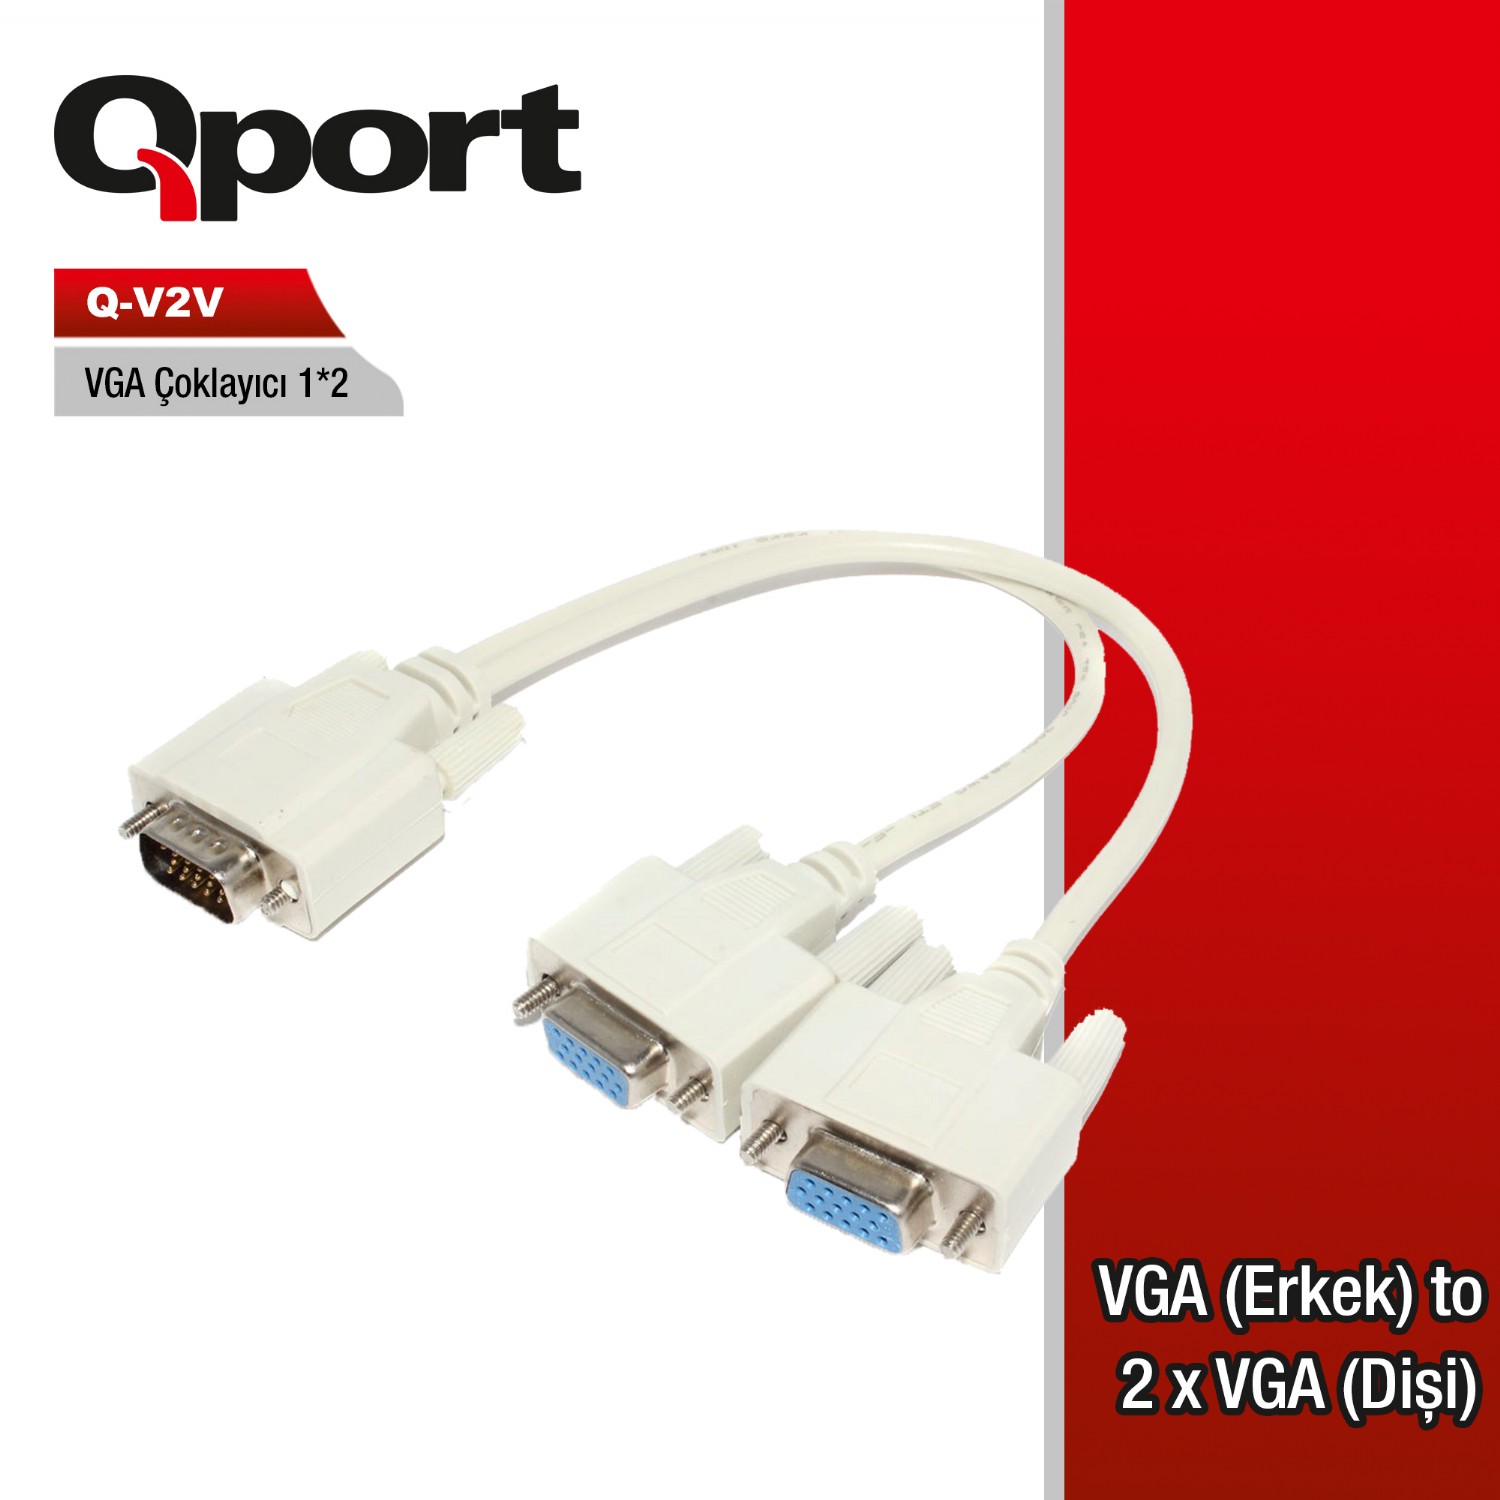 QPORT Q-V2V Y VGA ÇOKLAYICI 